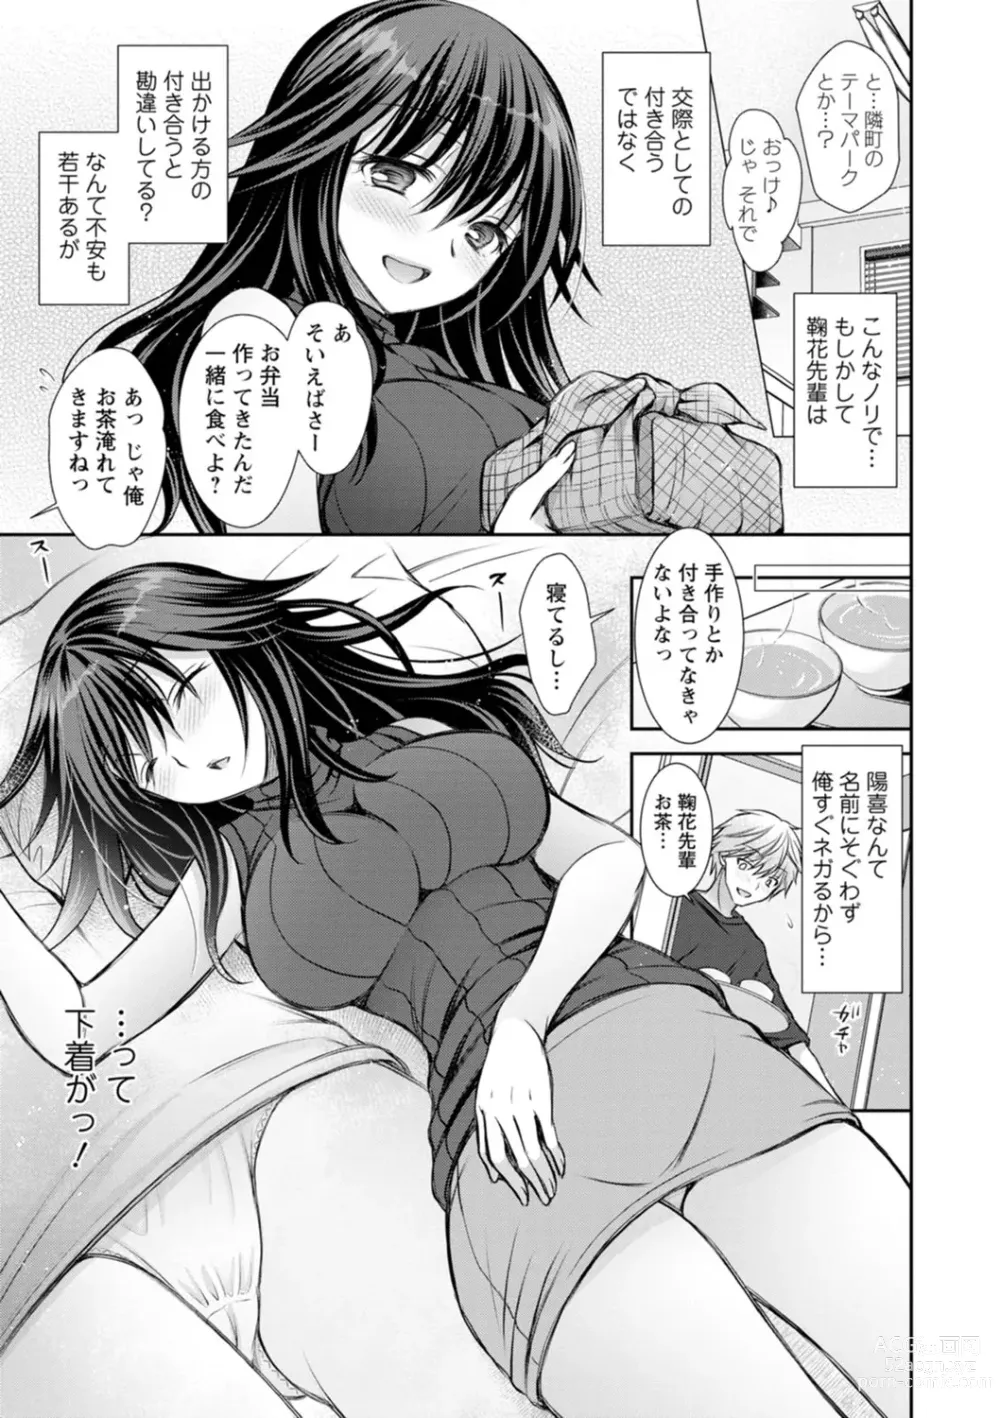 Page 25 of manga Furete Mitakute.